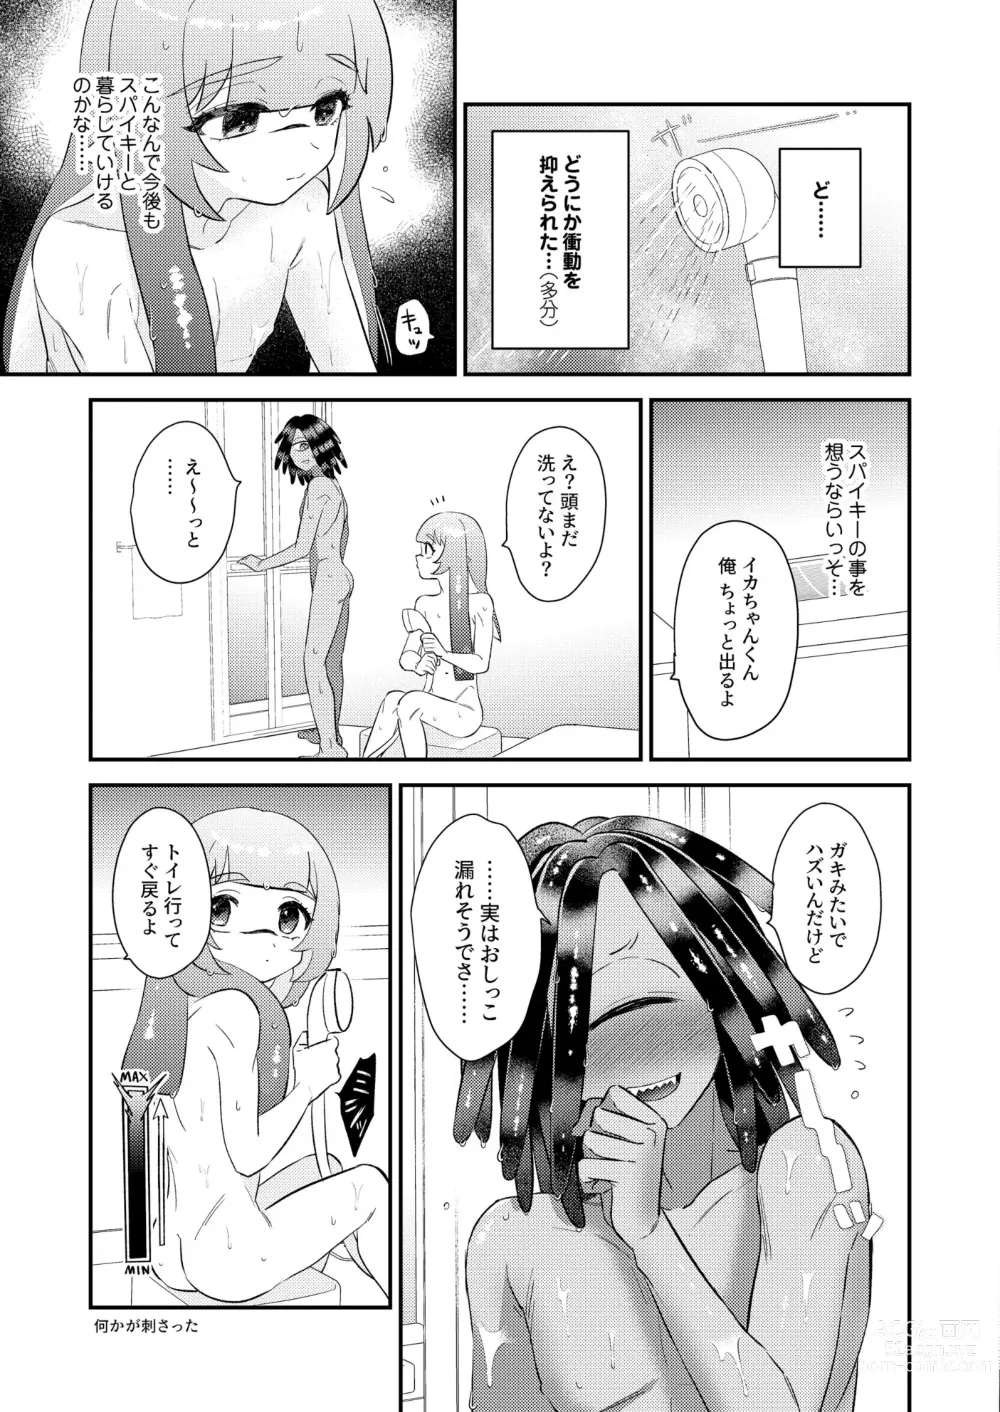 Page 16 of doujinshi Uketomete Hoshii no My Darling! - I want you to accept me my darling!